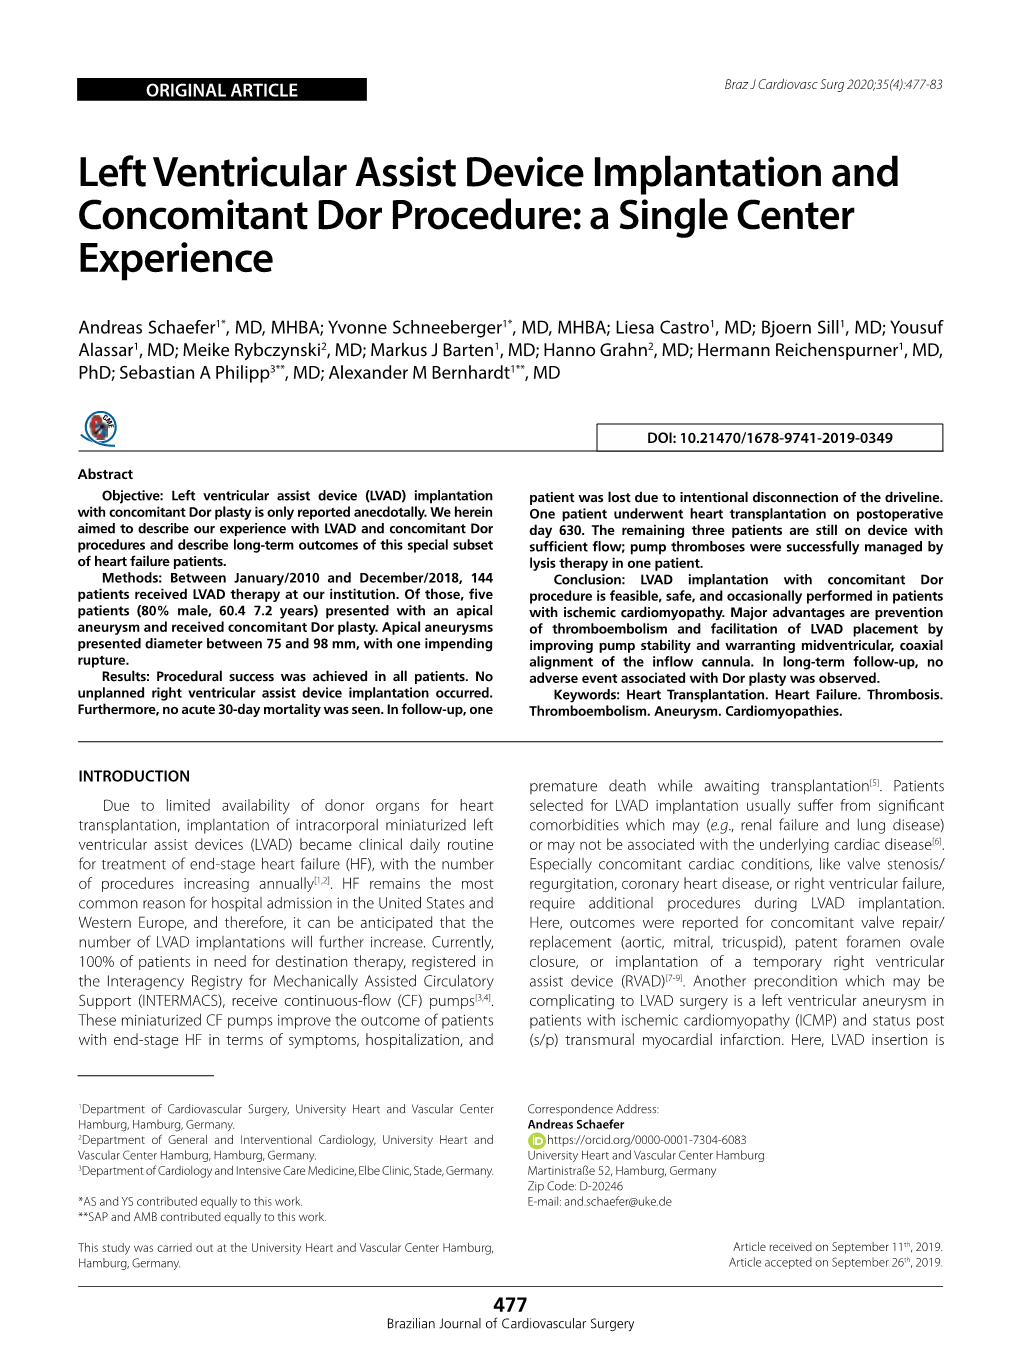 Left Ventricular Assist Device Implantation and Concomitant Dor Procedure: a Single Center Experience